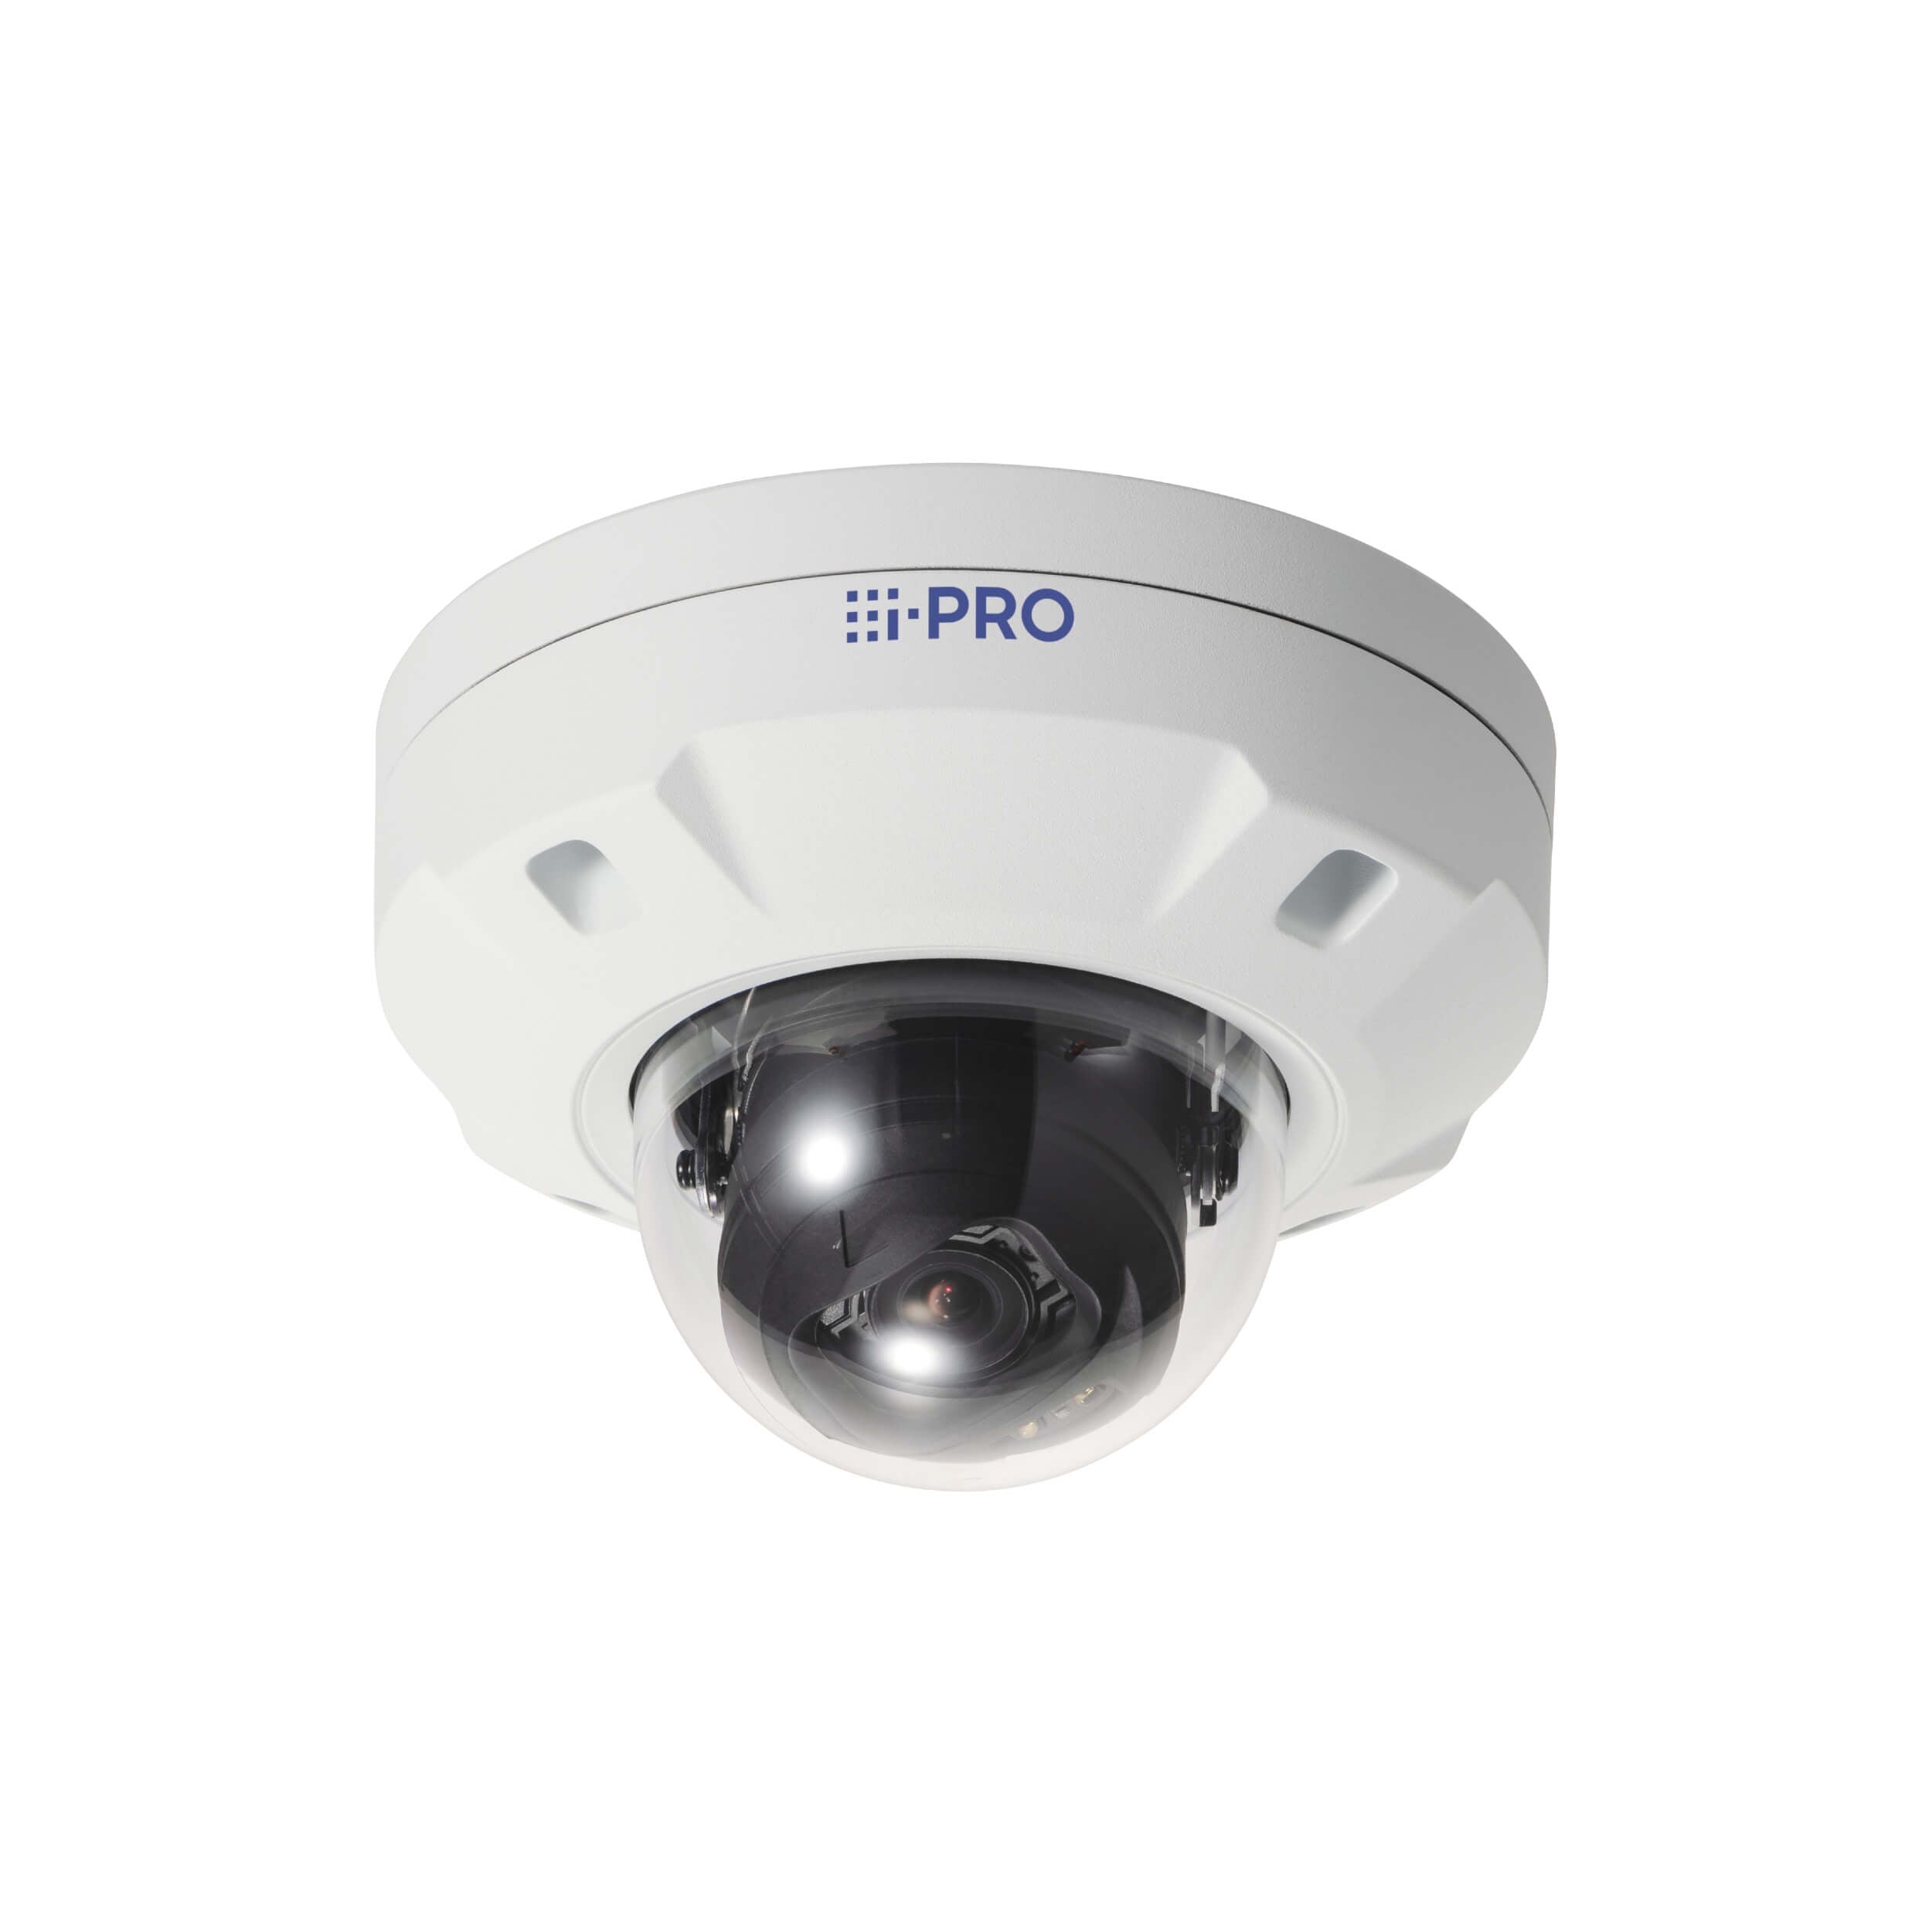 i-PRO WV-U2542LA 4 Megapixel Network IR Indoor Dome Camera with 2.9-7.3mm Lens